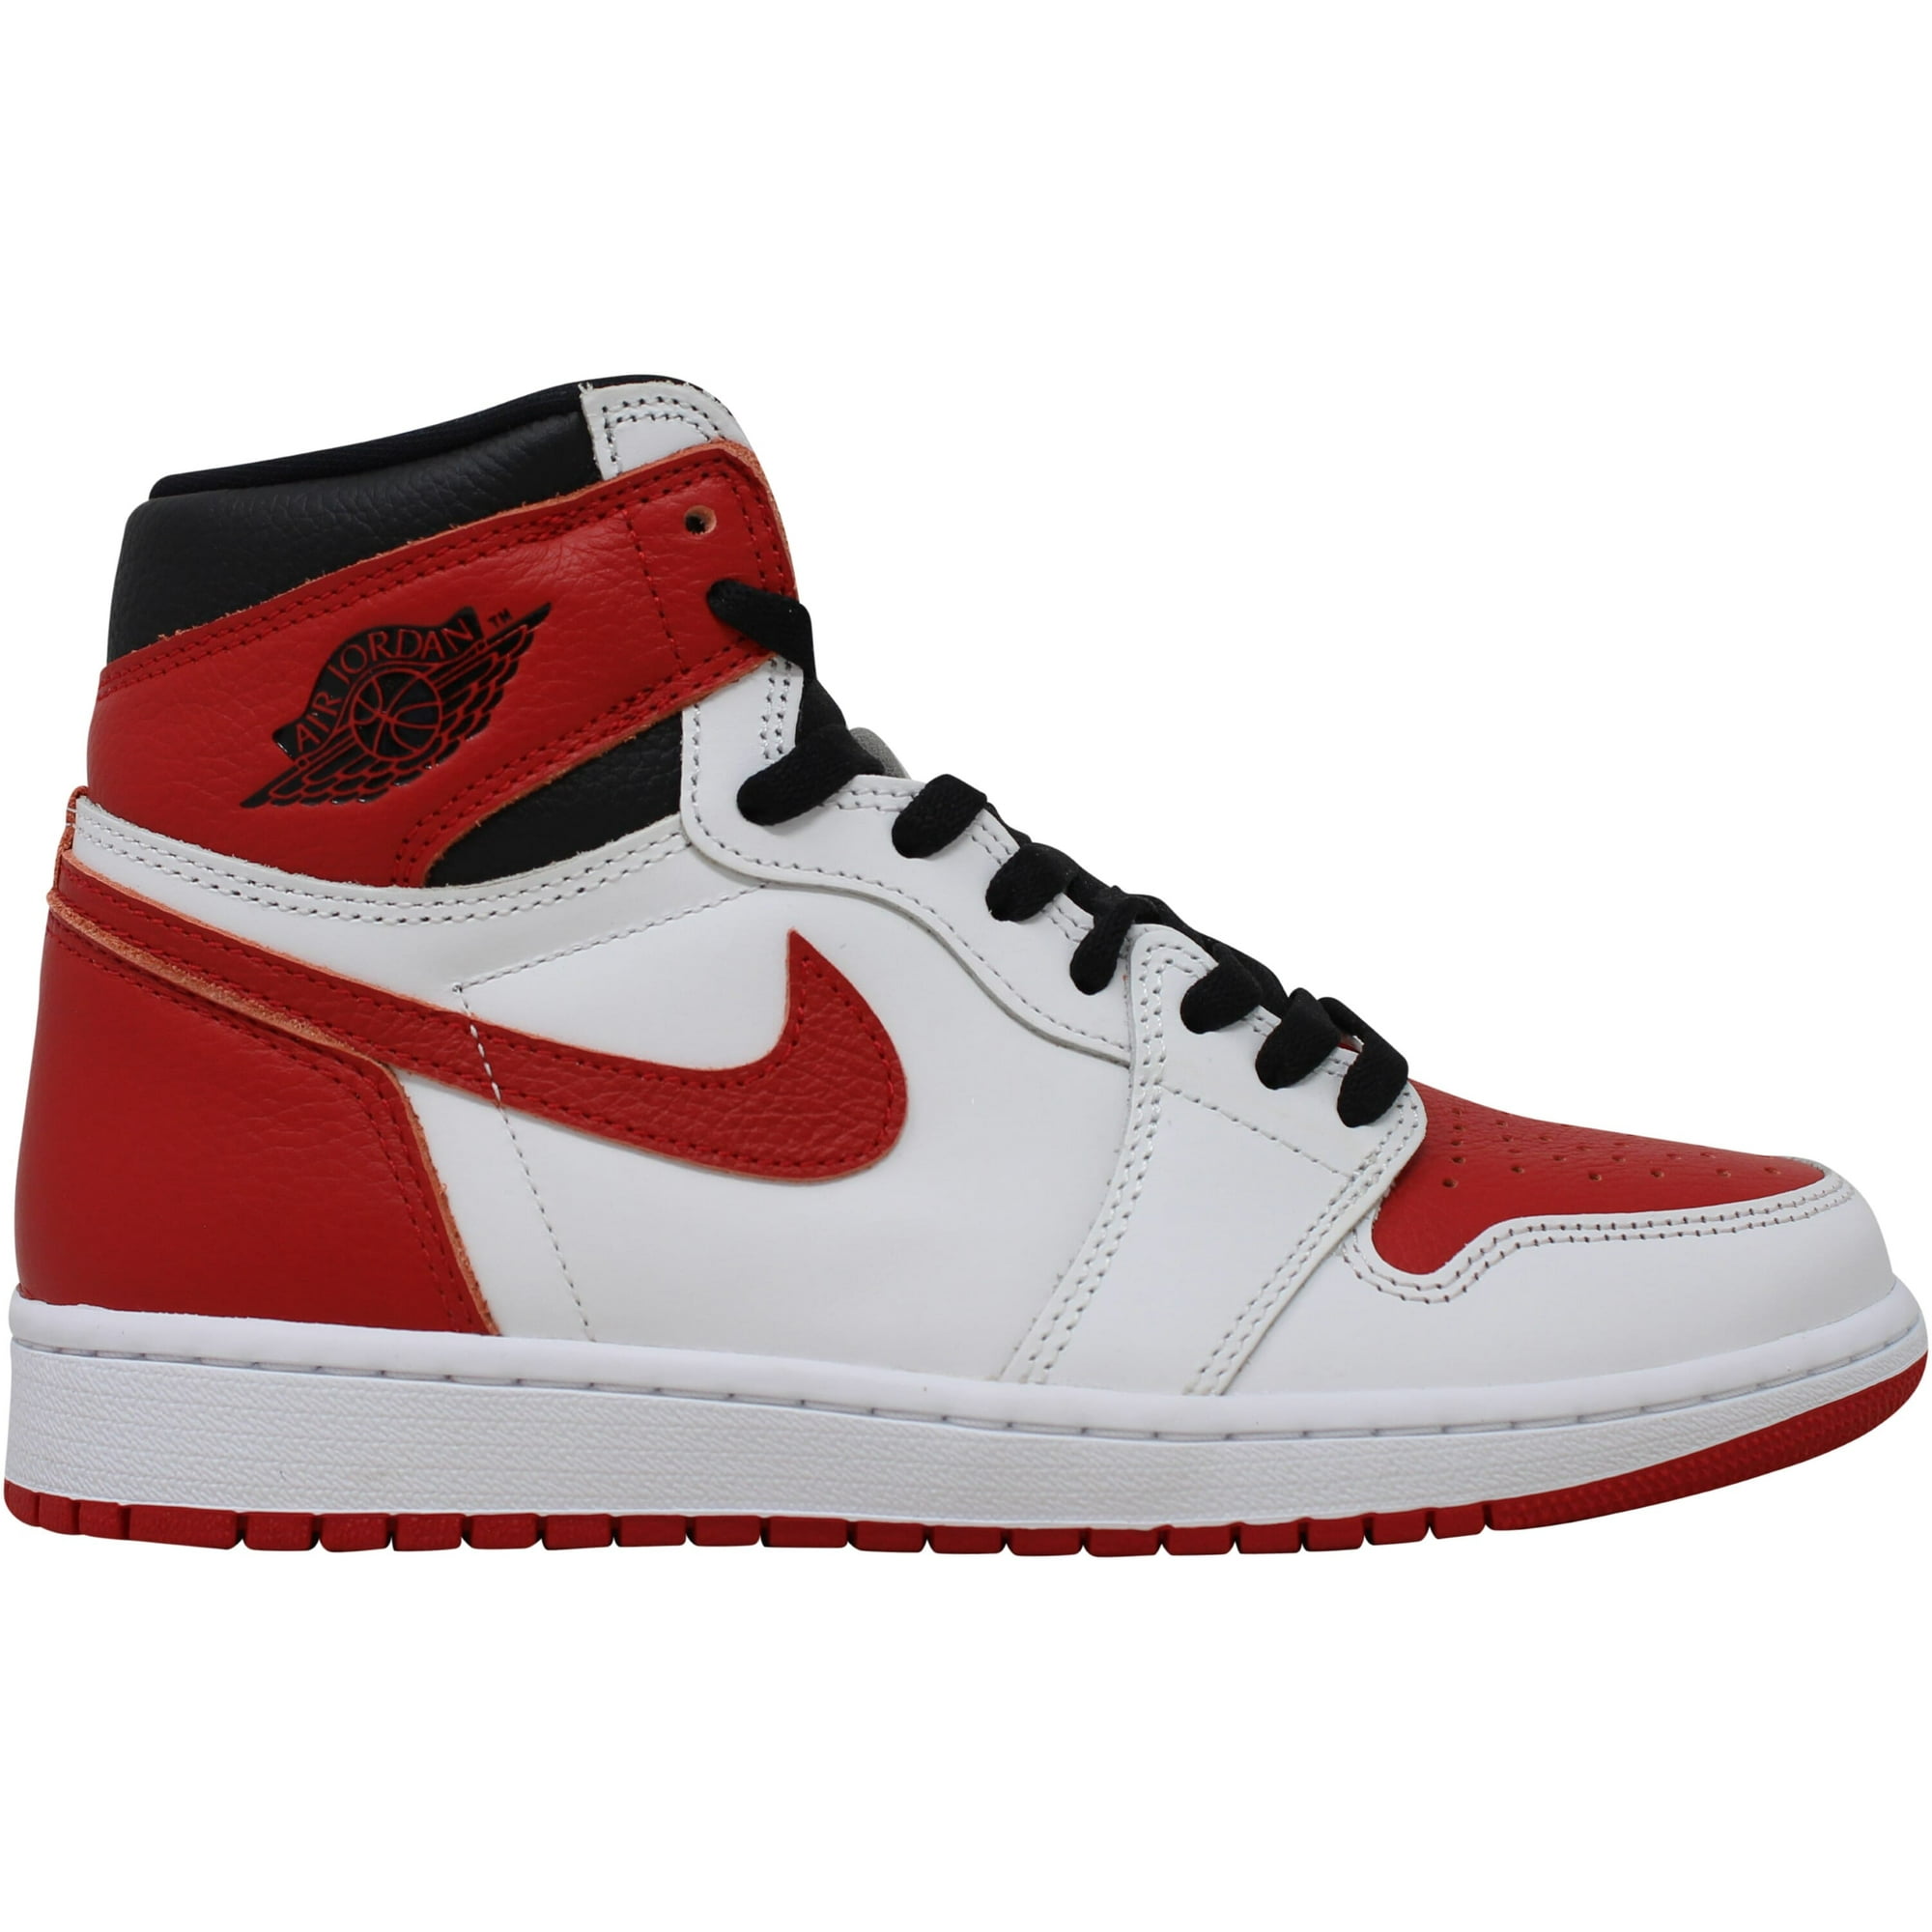 Nike Air Jordan 1 Retro OG White/University Red-Black 555088-161 Men's Size 8.5 Medium | Walmart Canada